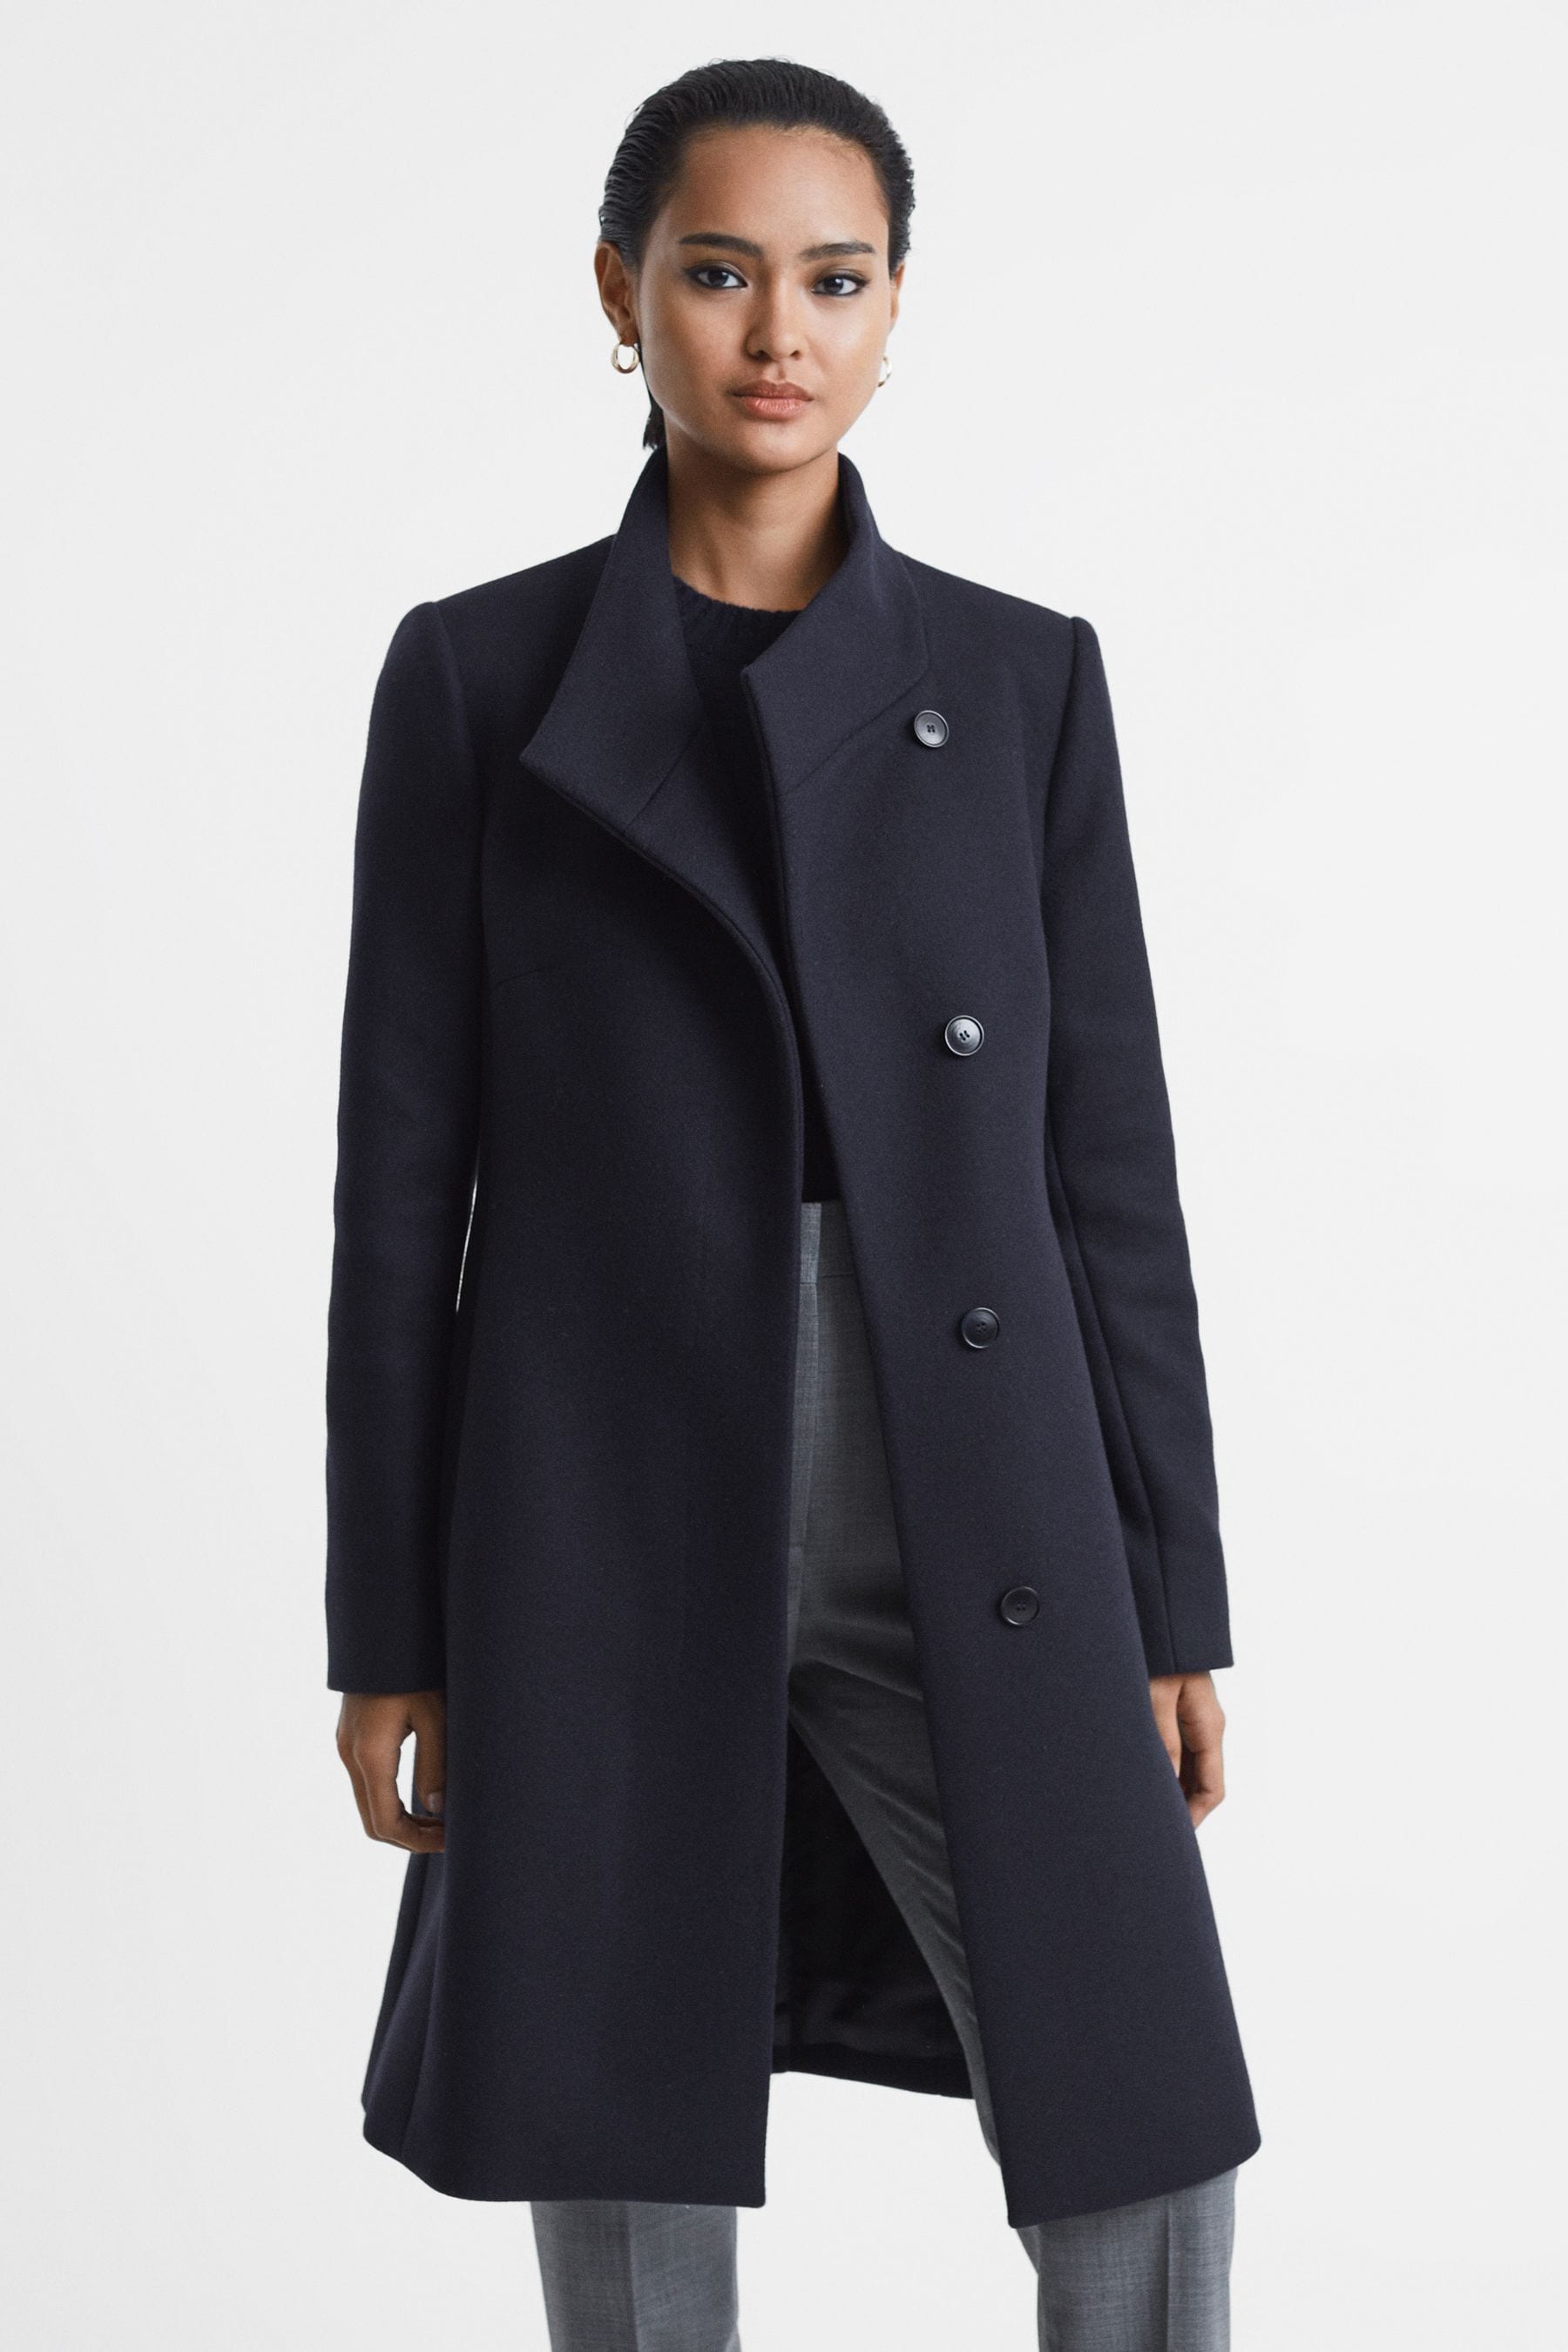 Reiss Mia - Navy Wool Blend Mid-length Coat, Us 12